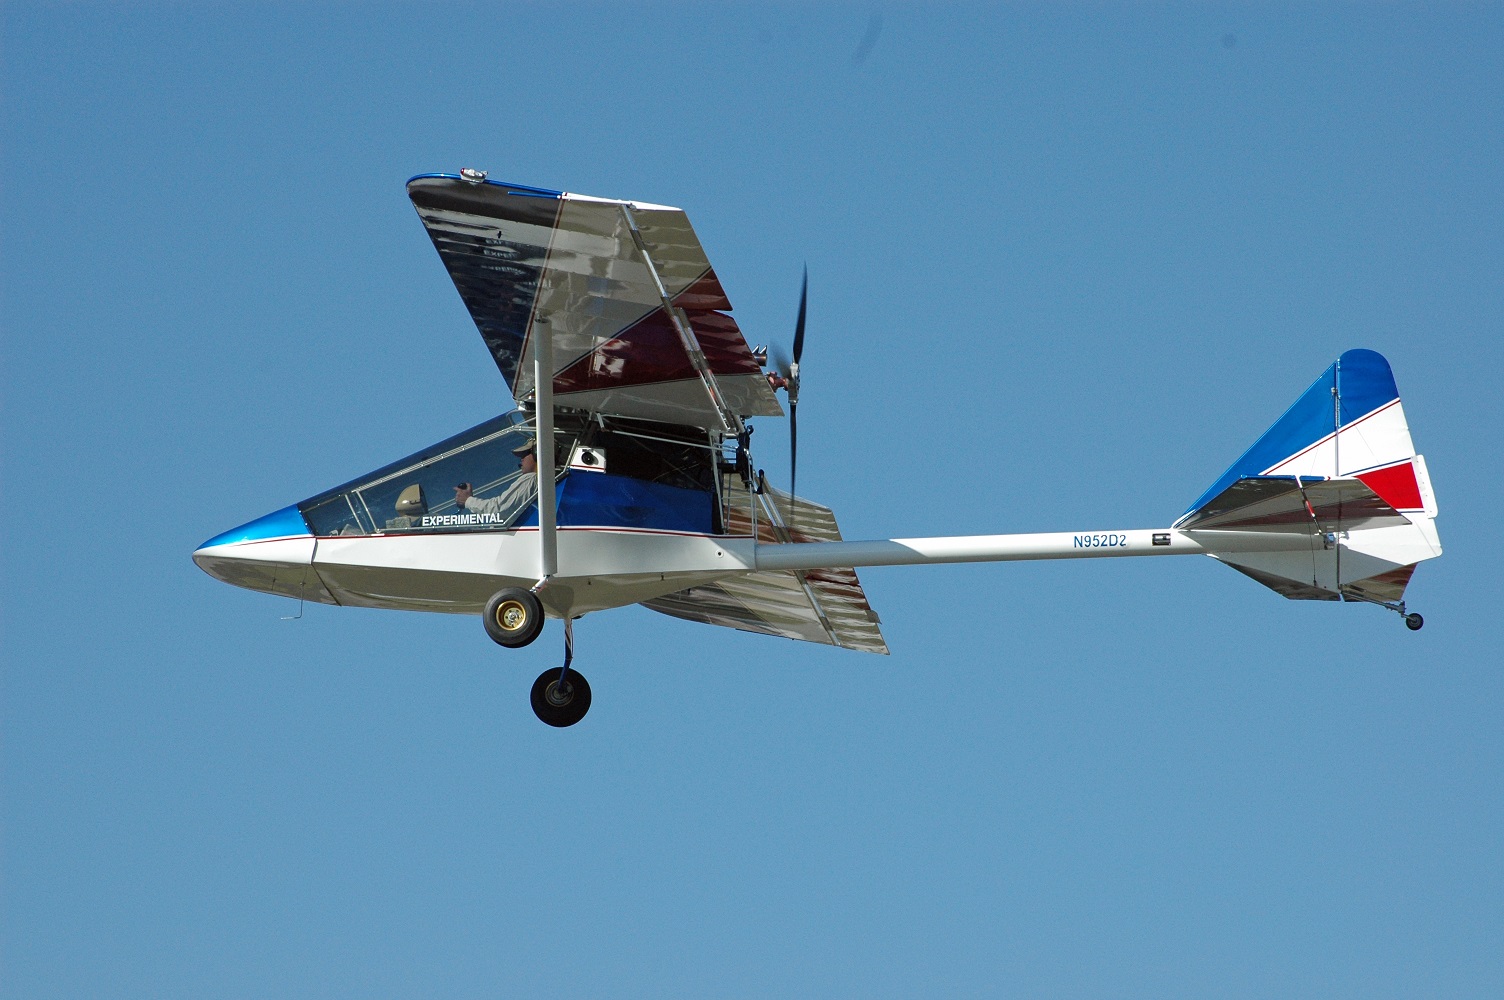 Experimental aircraft